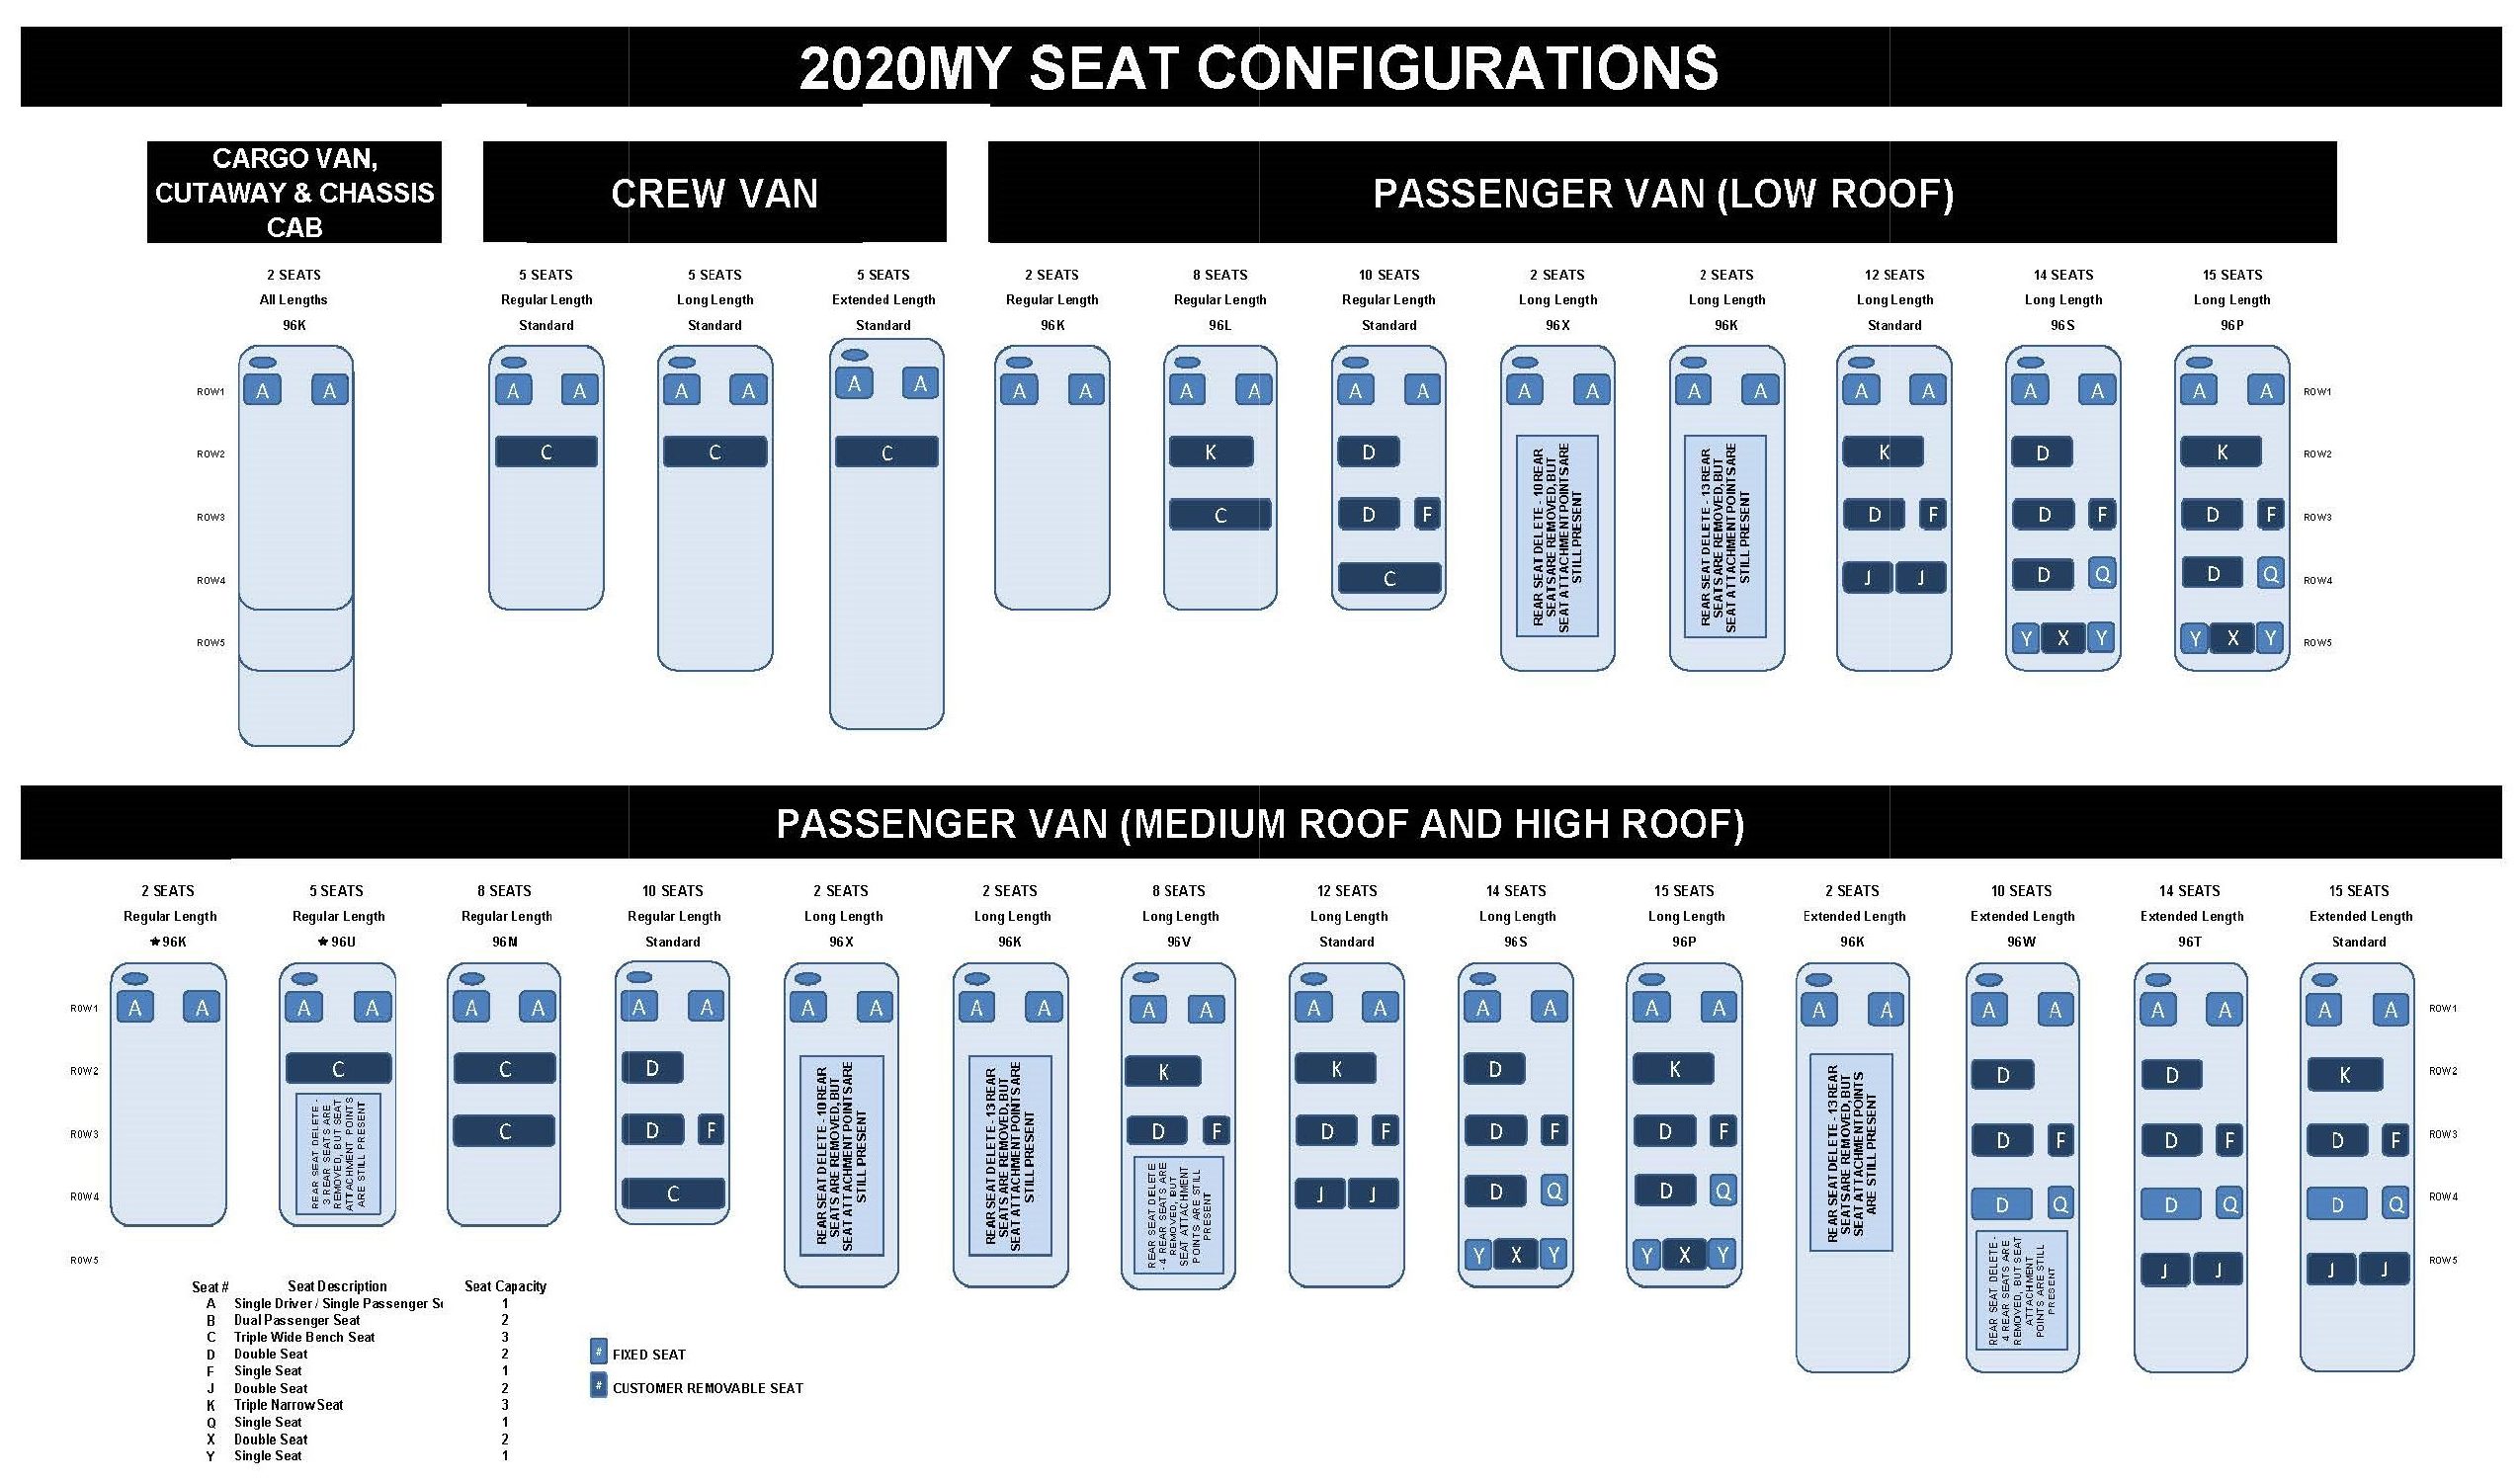 2022 Transit Seat Configurations